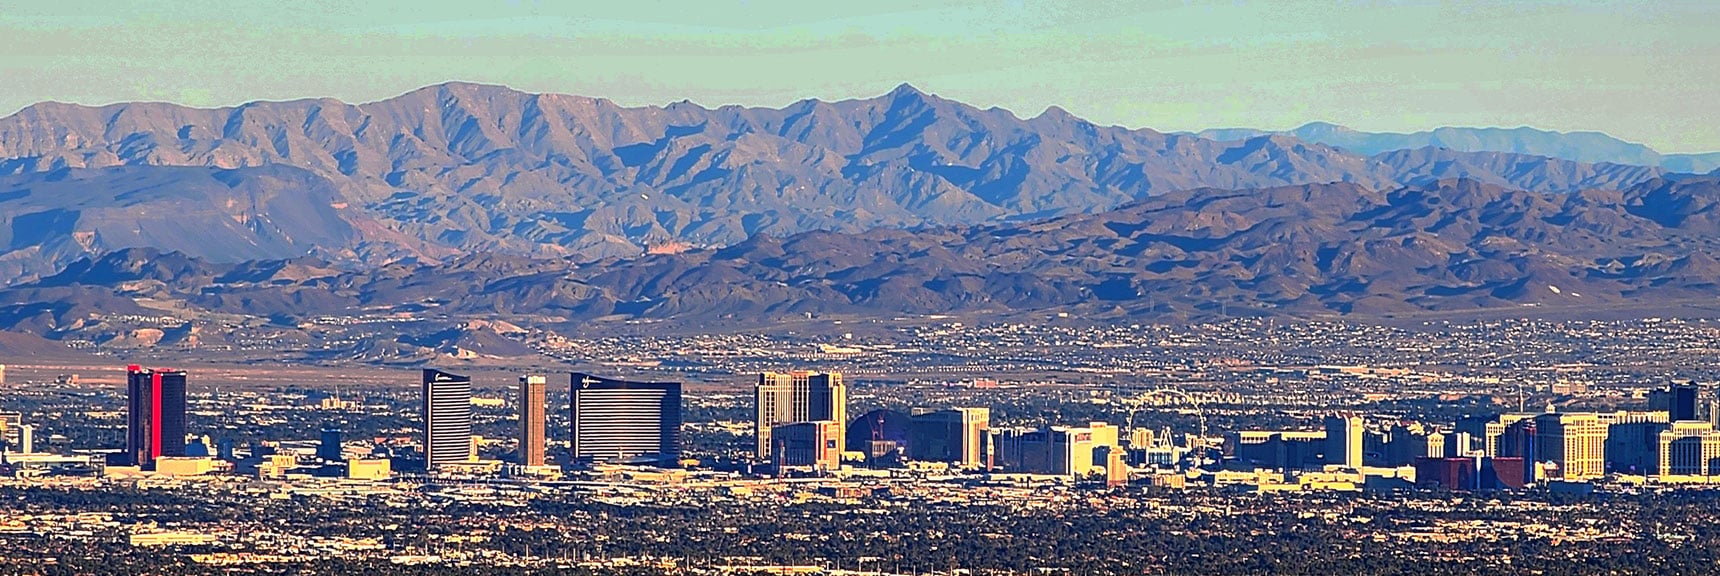 Mid Vegas Strip. High Pointed Mt. Beyond is Arizona Mt. Wilson. | 3 Basin Circuit | Calico Basin, Brownstone Basin, Red Rock Canyon, Nevada